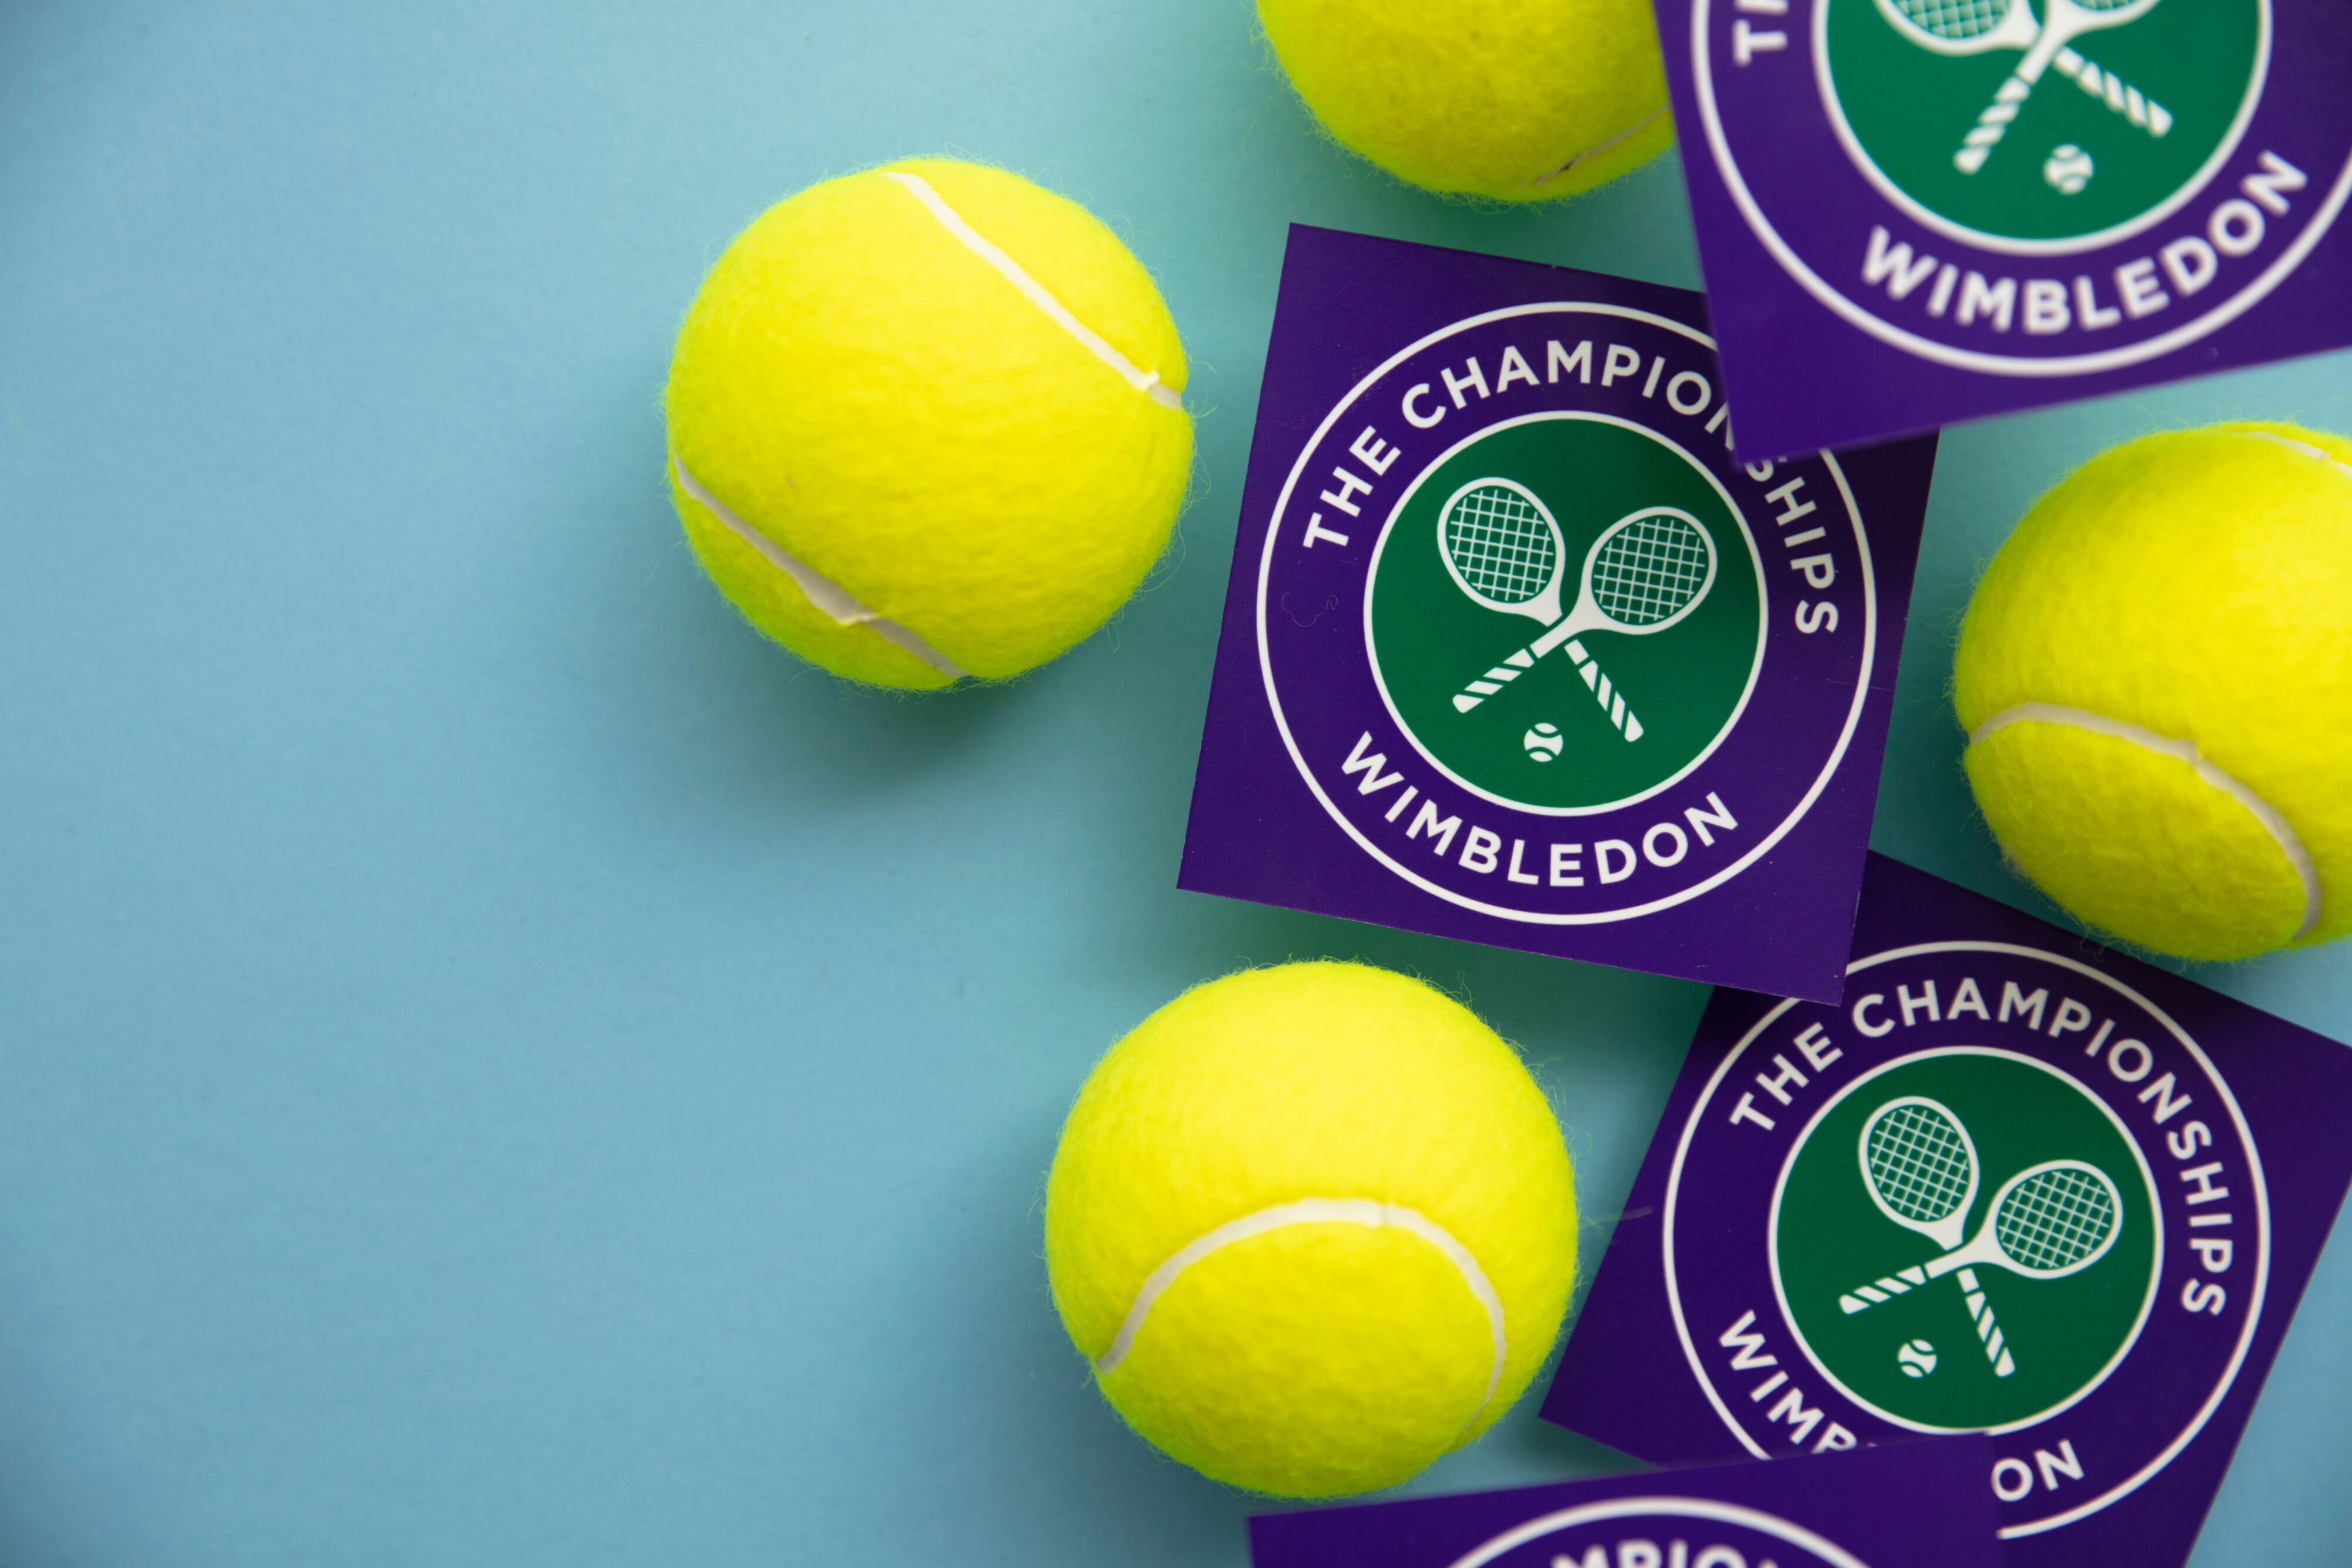 LONDON, UK - June 2022: Wimbledon tennis championships logo with tennis ball